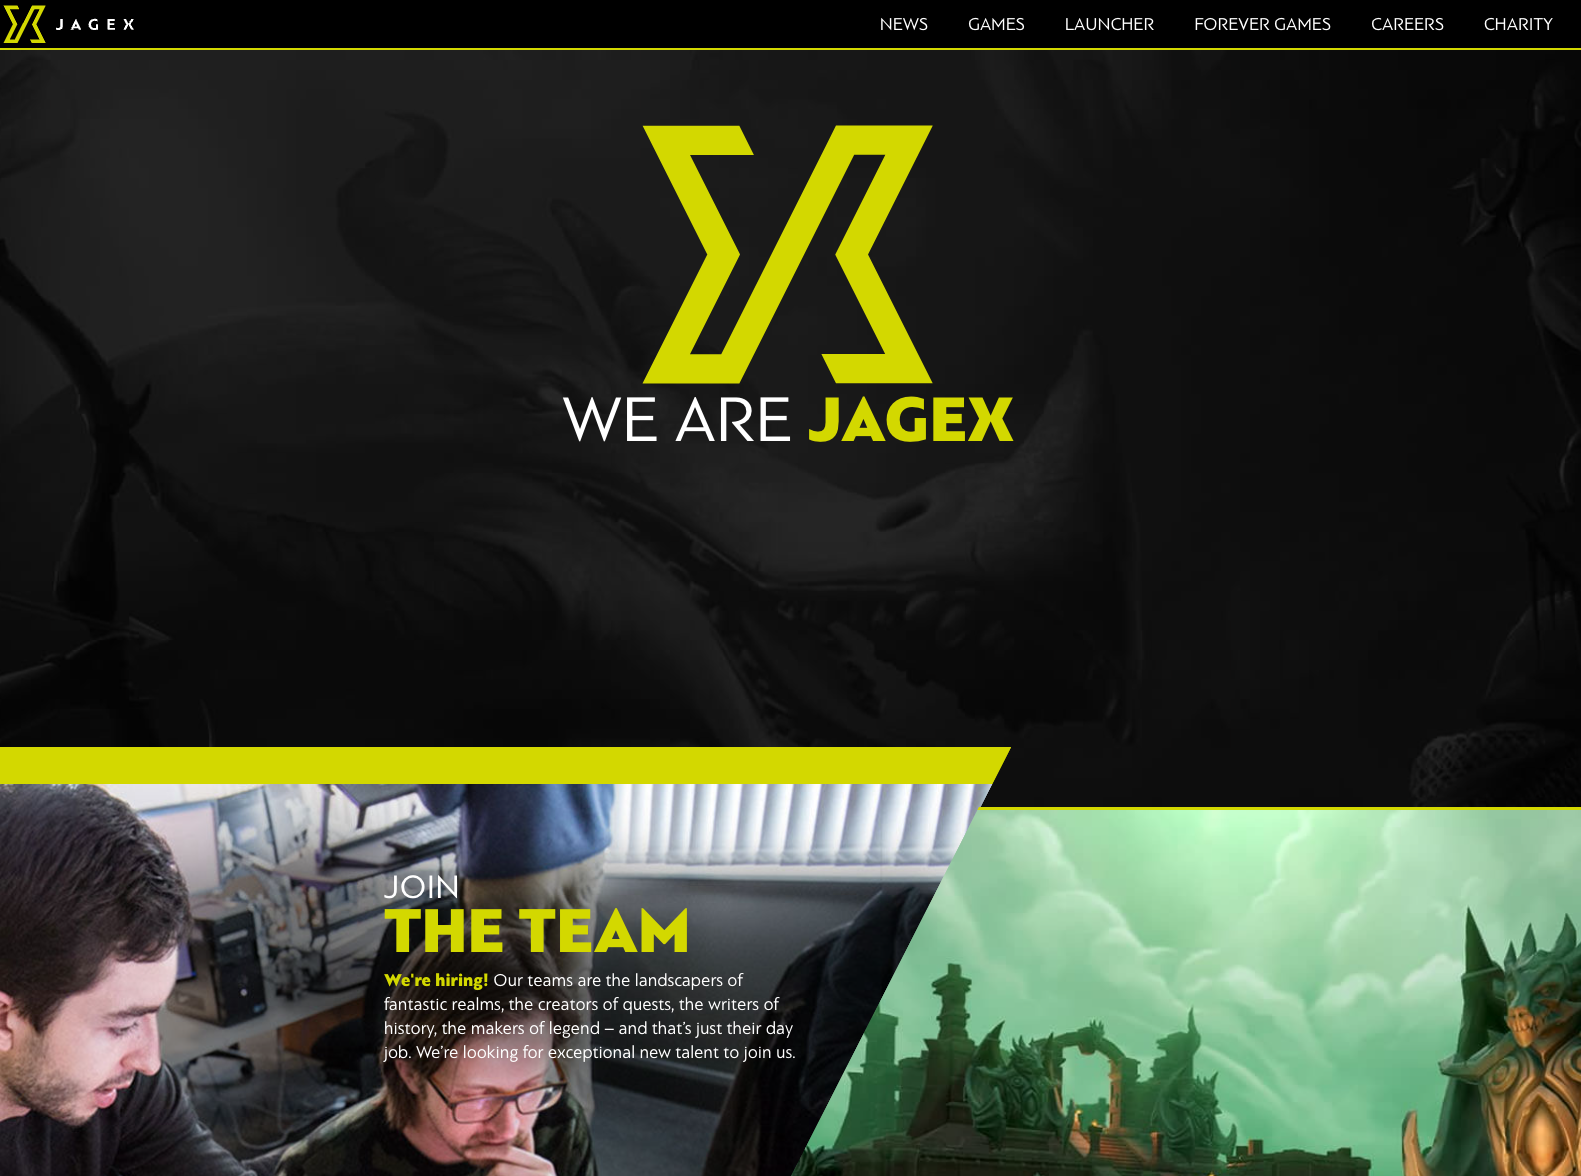 The Jagex corporate website homepage